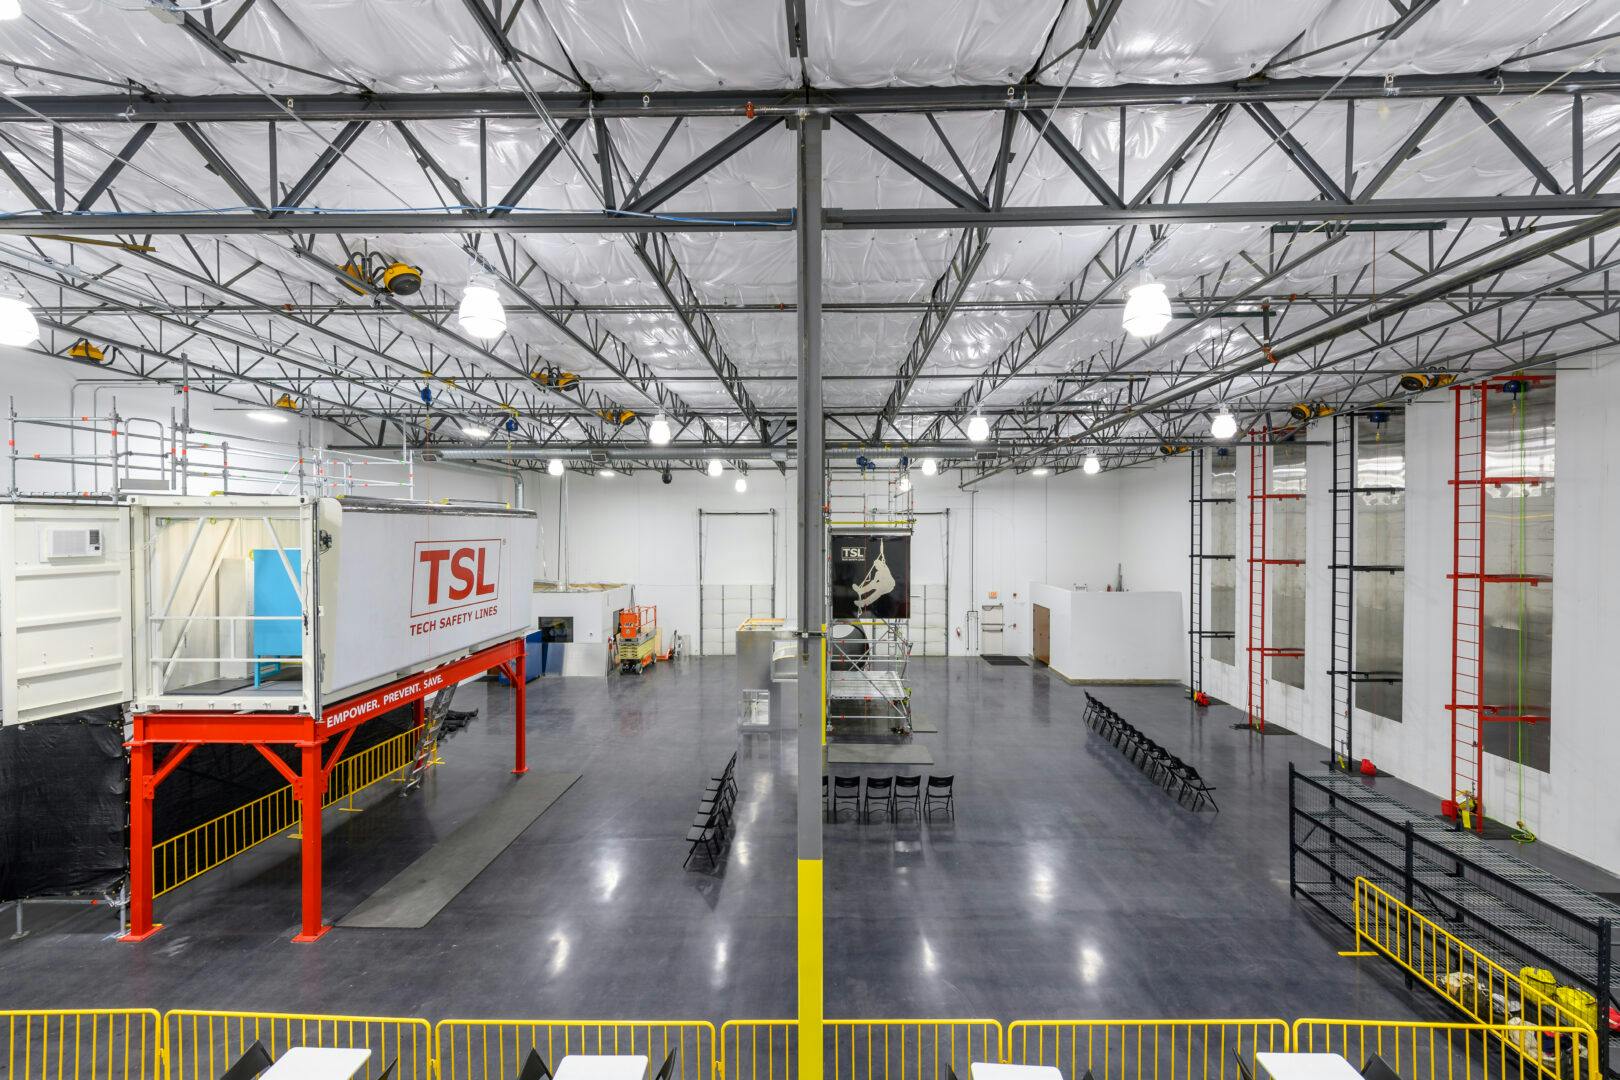 TSL training interior